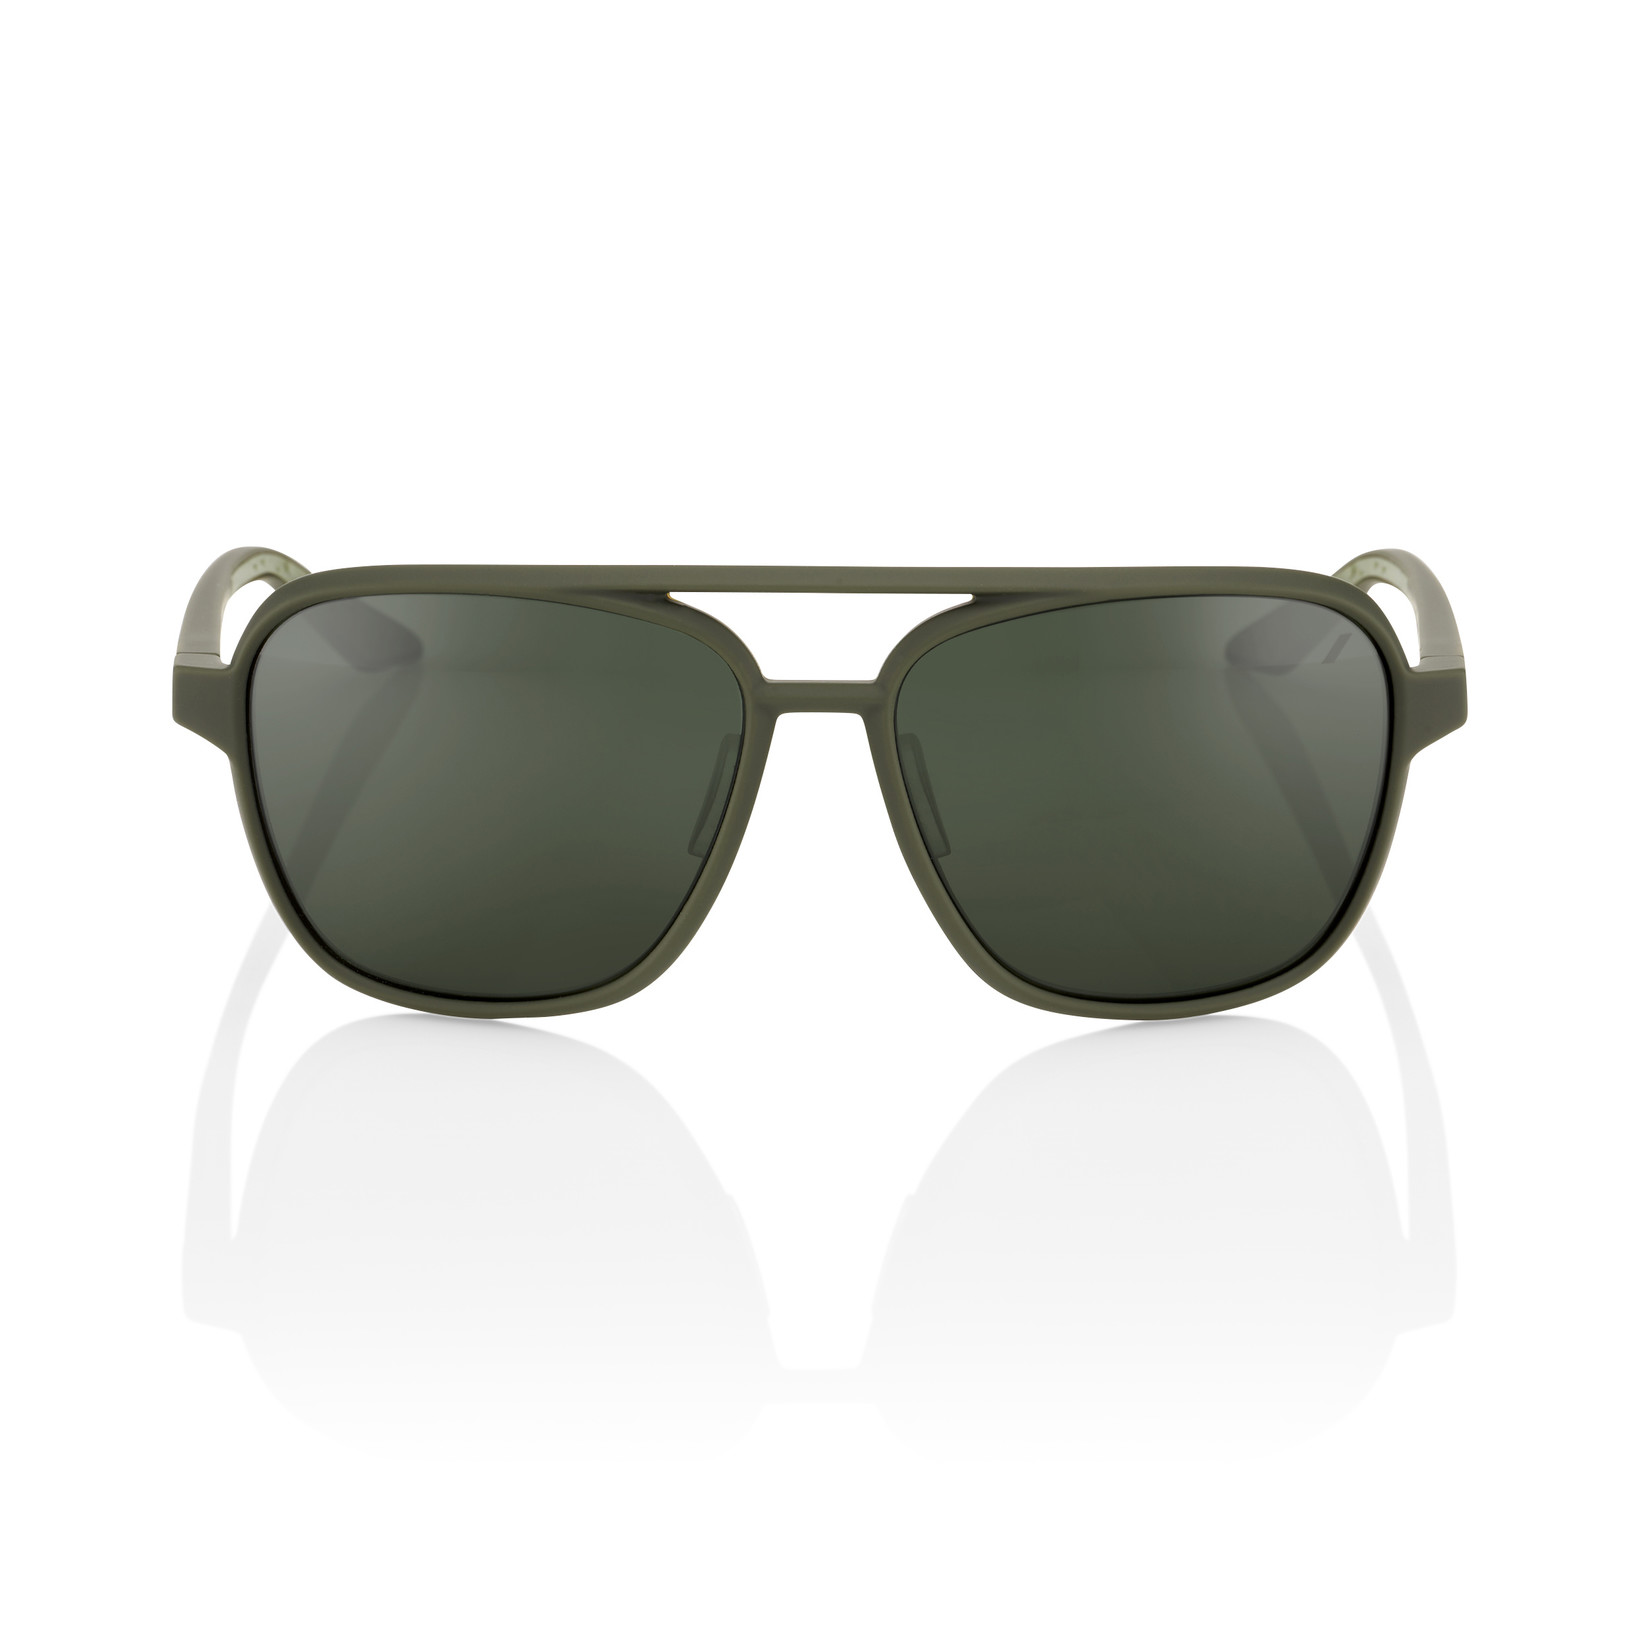 1 100% Kasia Sunglasses Soft Tact Army Green - Grey Green